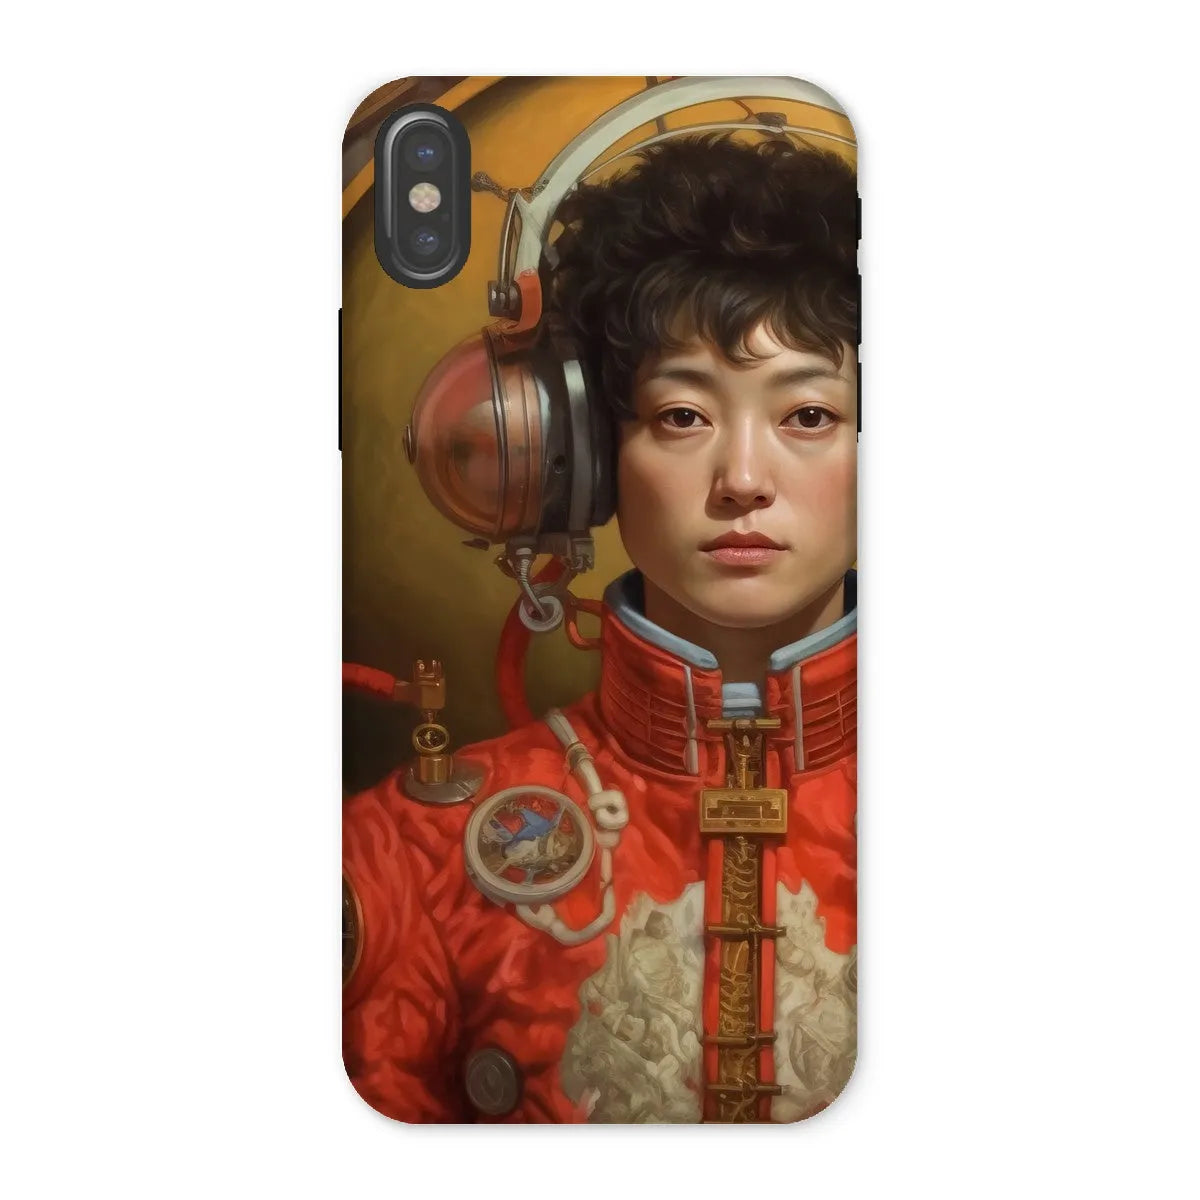 Mùchén The Gay Astronaut - Lgbtq Art Phone Case - Iphone x / Matte - Mobile Phone Cases - Aesthetic Art